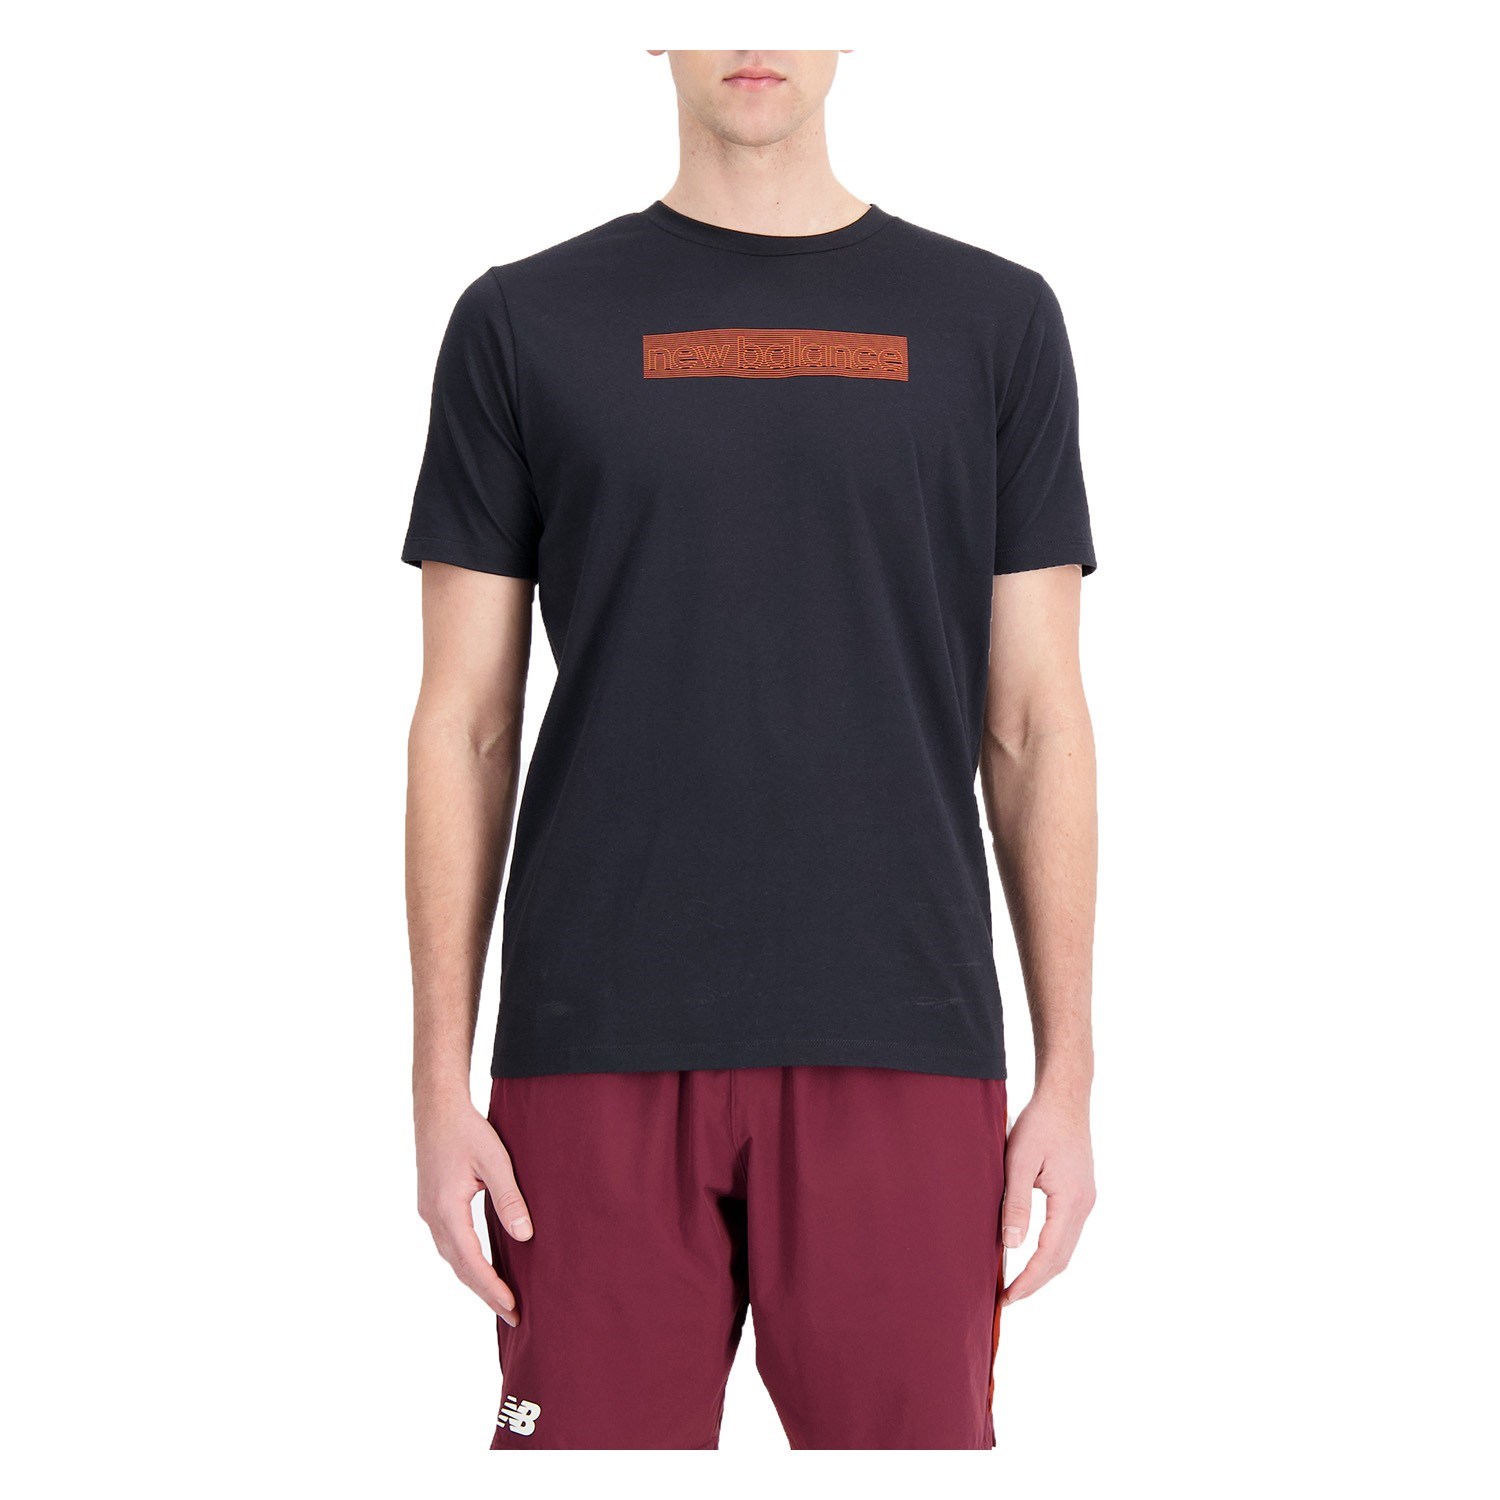 Heathertech | Sportitude - Mens Balance T-Shirt Tenacity Graphic Black/Multi New